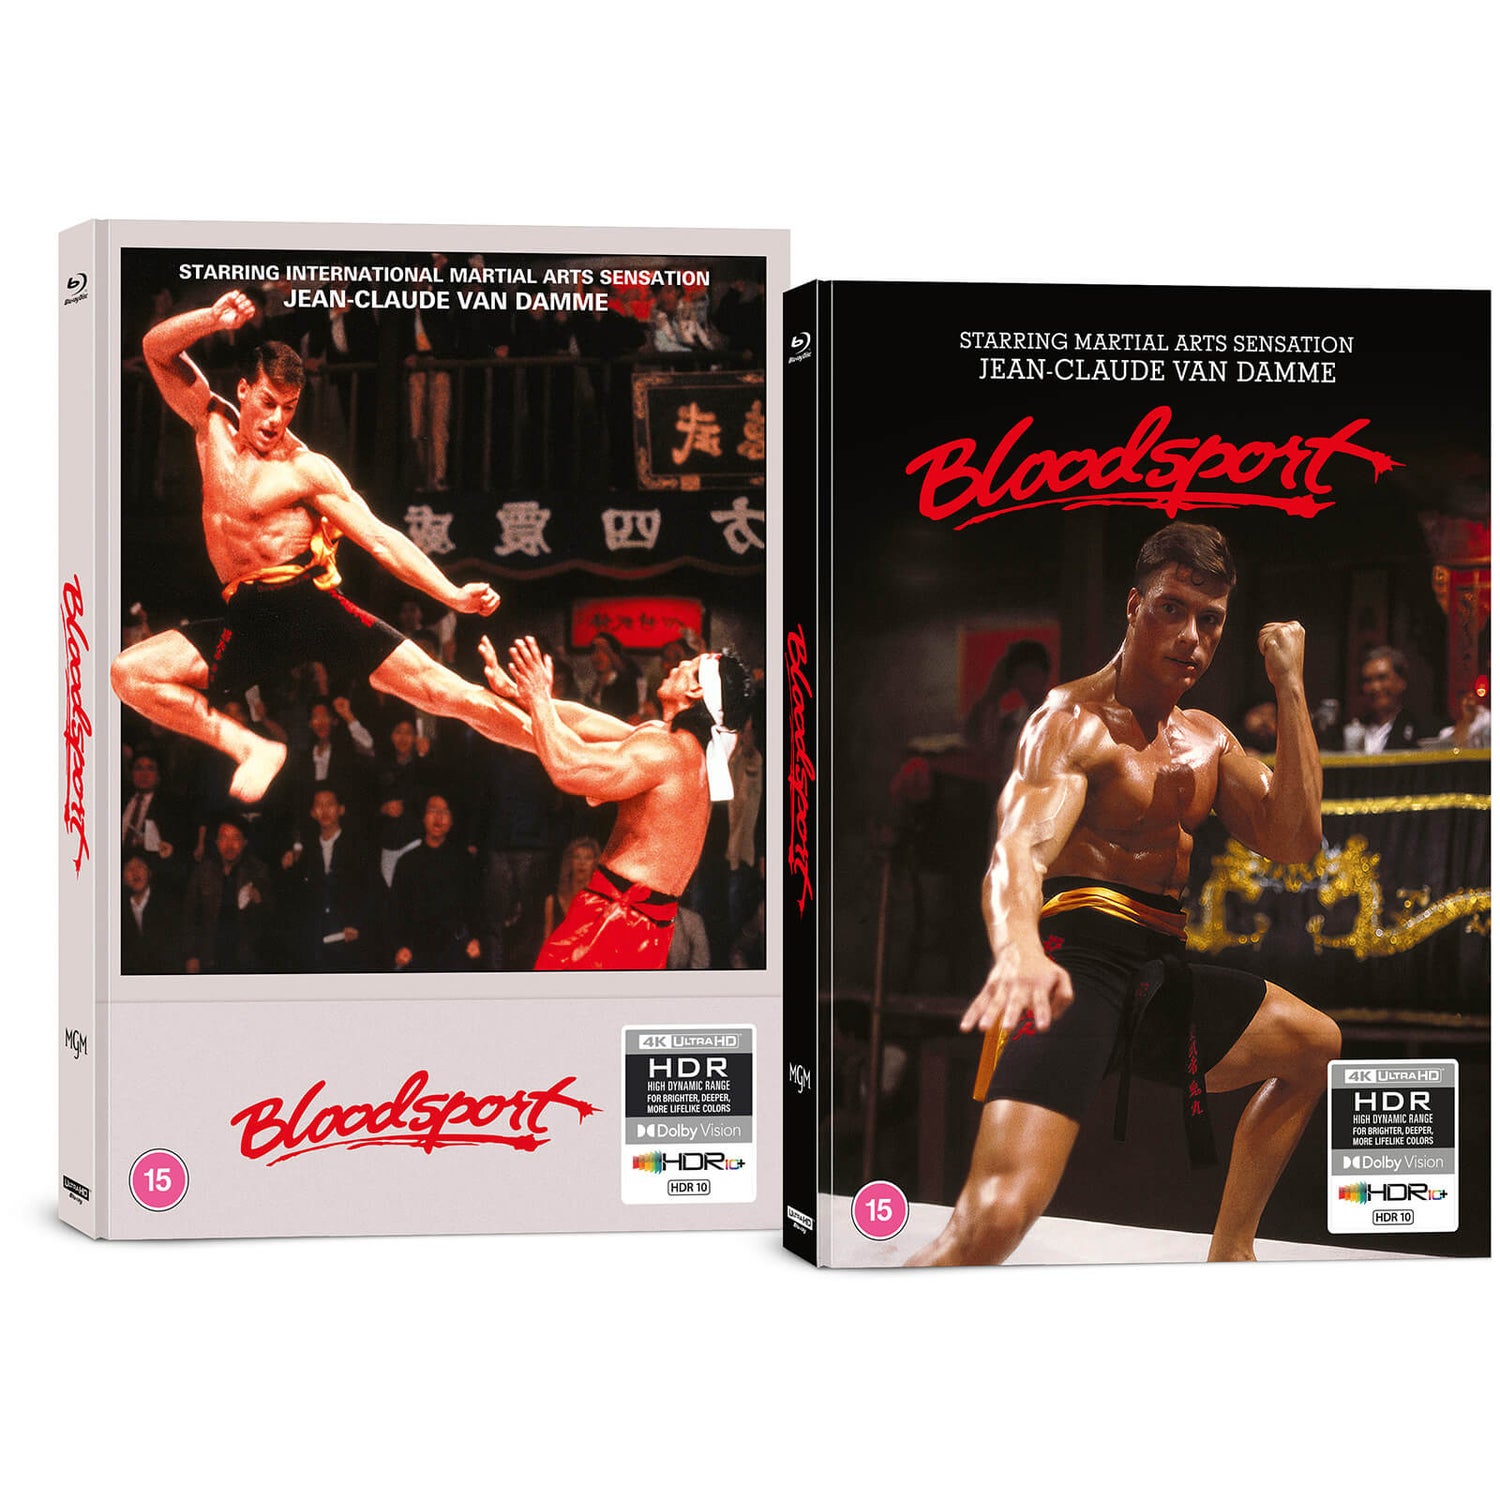 Bloodsport Limited Collectors Edition 4K Ultra HD Mediabook Artwork B (includes Blu-ray)